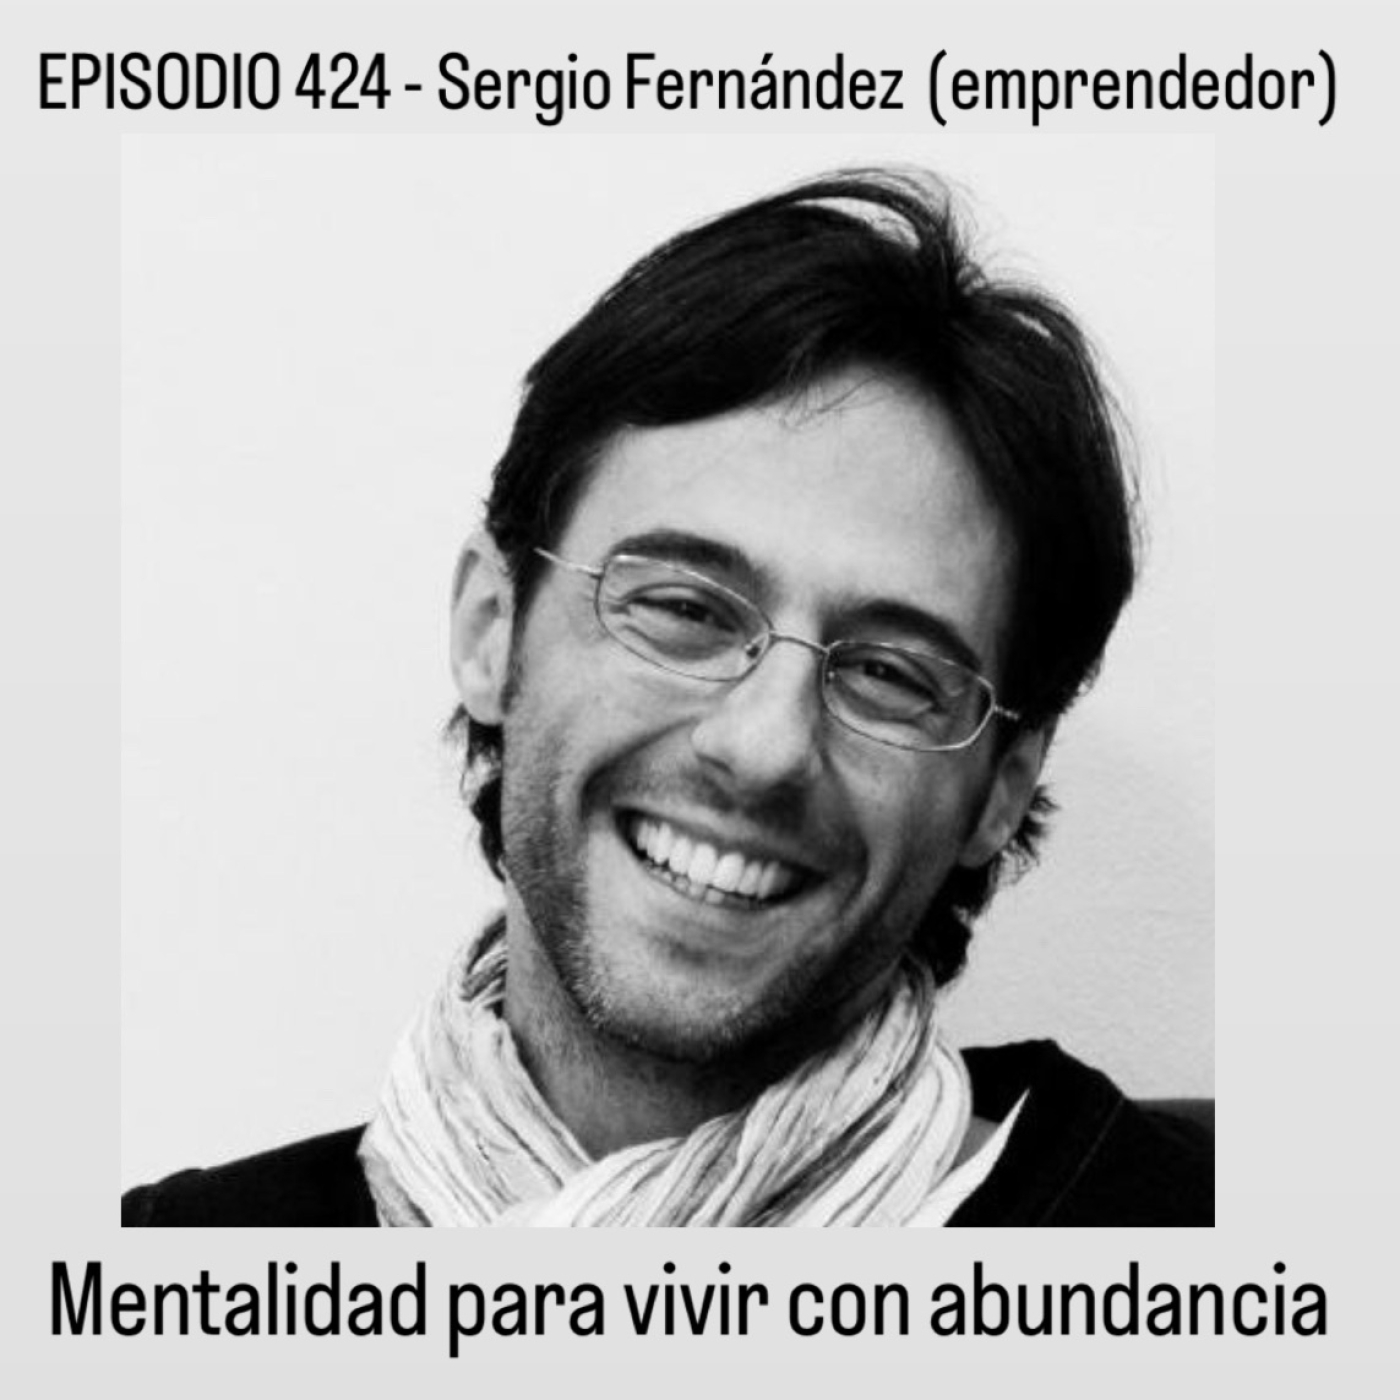 VIVIR CON ABUNDANCIA TE CAMBIA LA VIDA // Sergio Fernández con Pedro Vivar